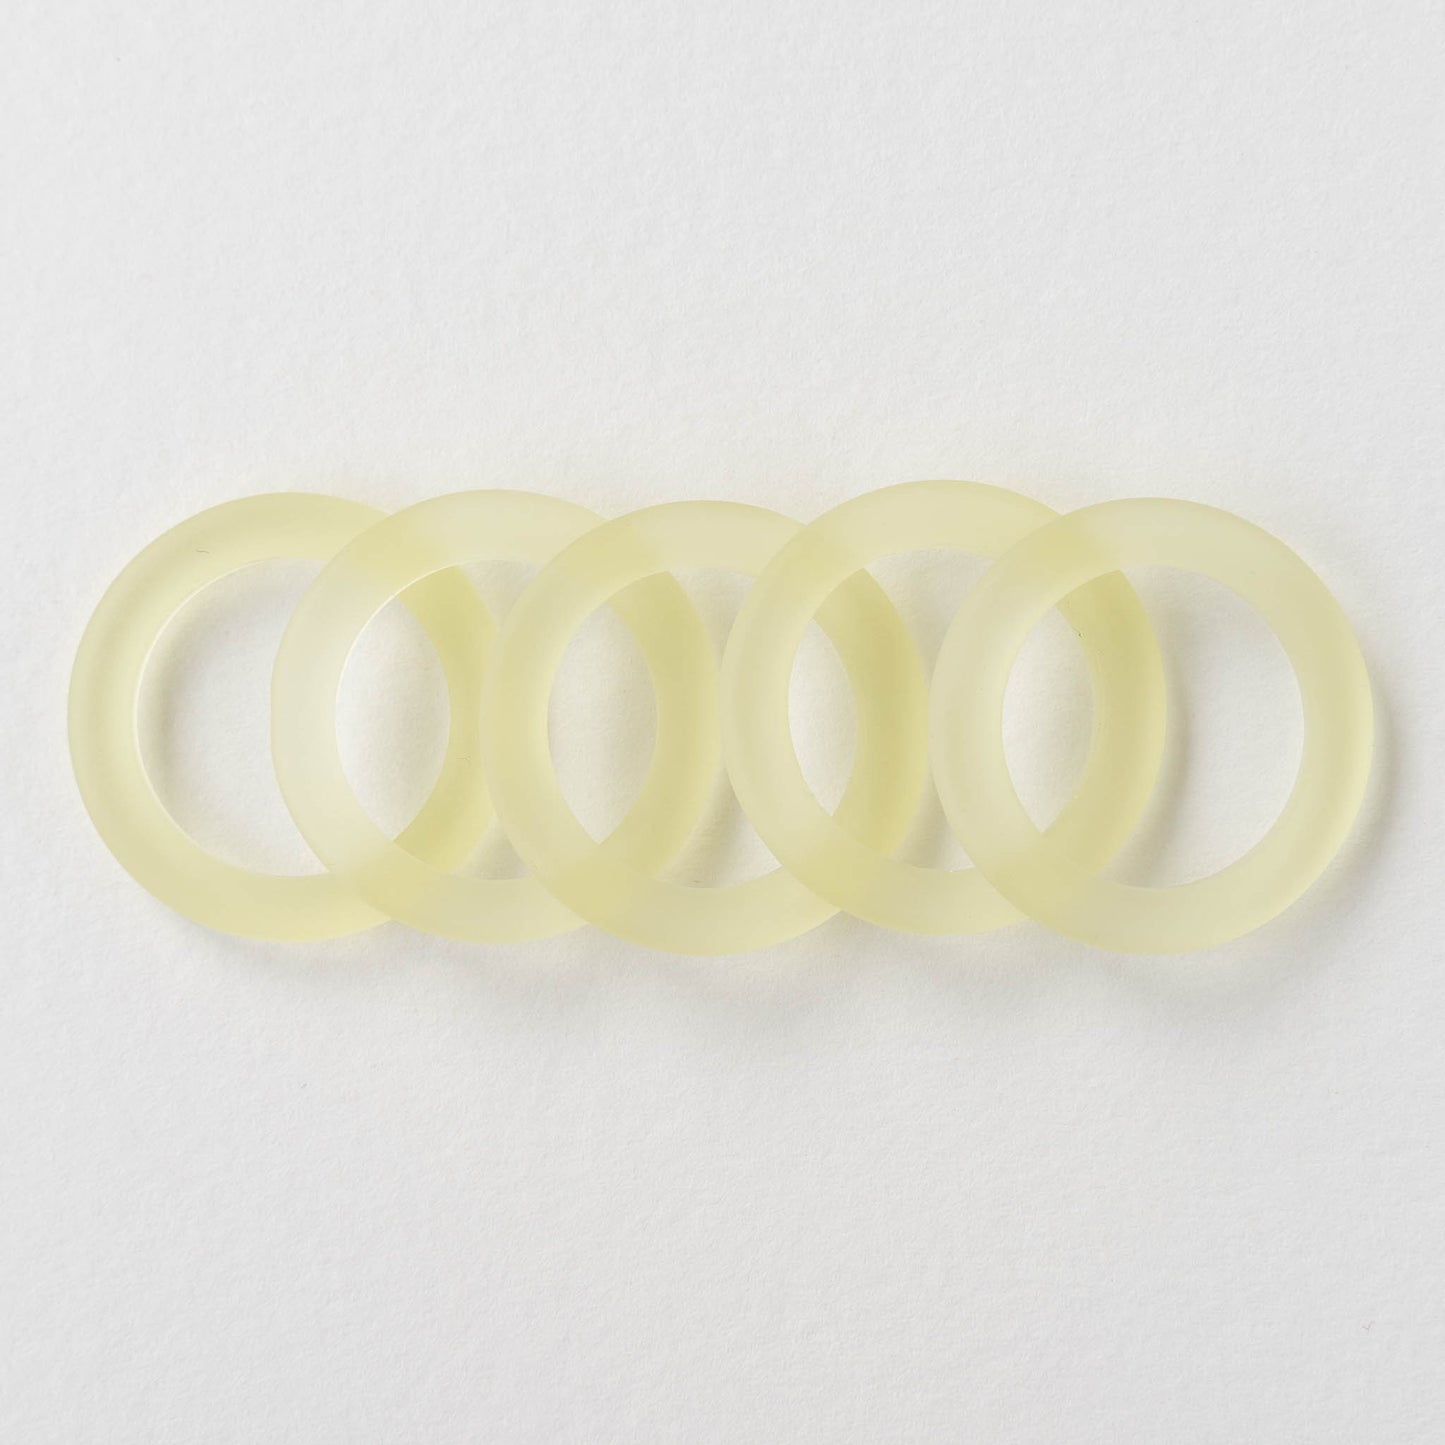 27mm Frosted Glass Rings - Lemon Chiffon - 2 Rings